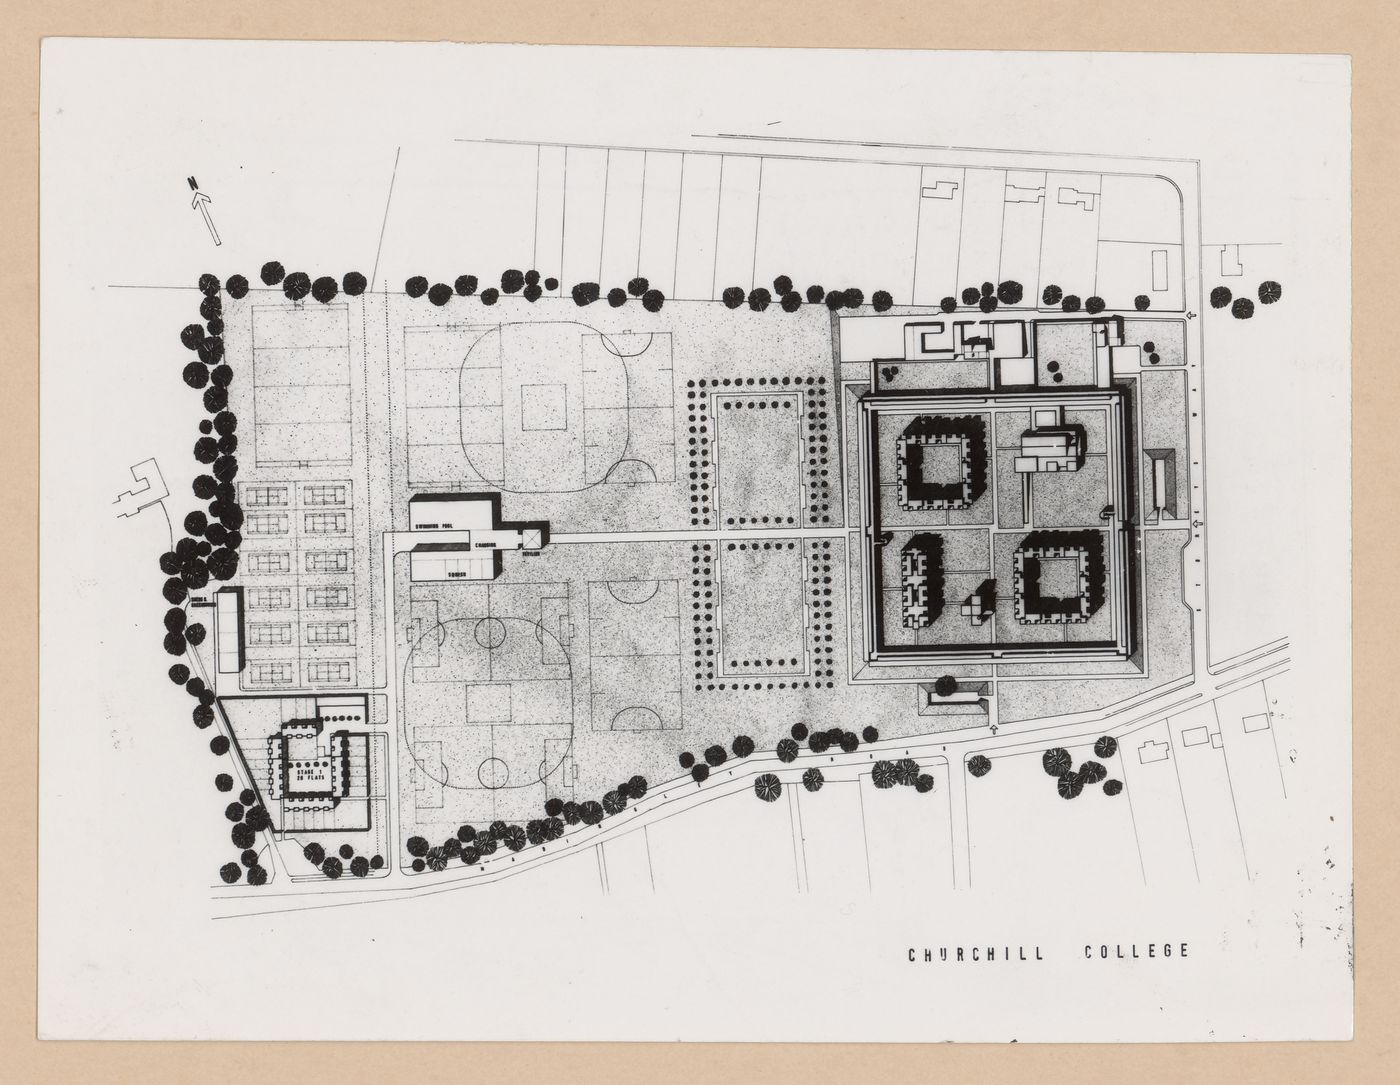 Photograph of plan for Churchill College, University of Cambridge, Cambridge, England